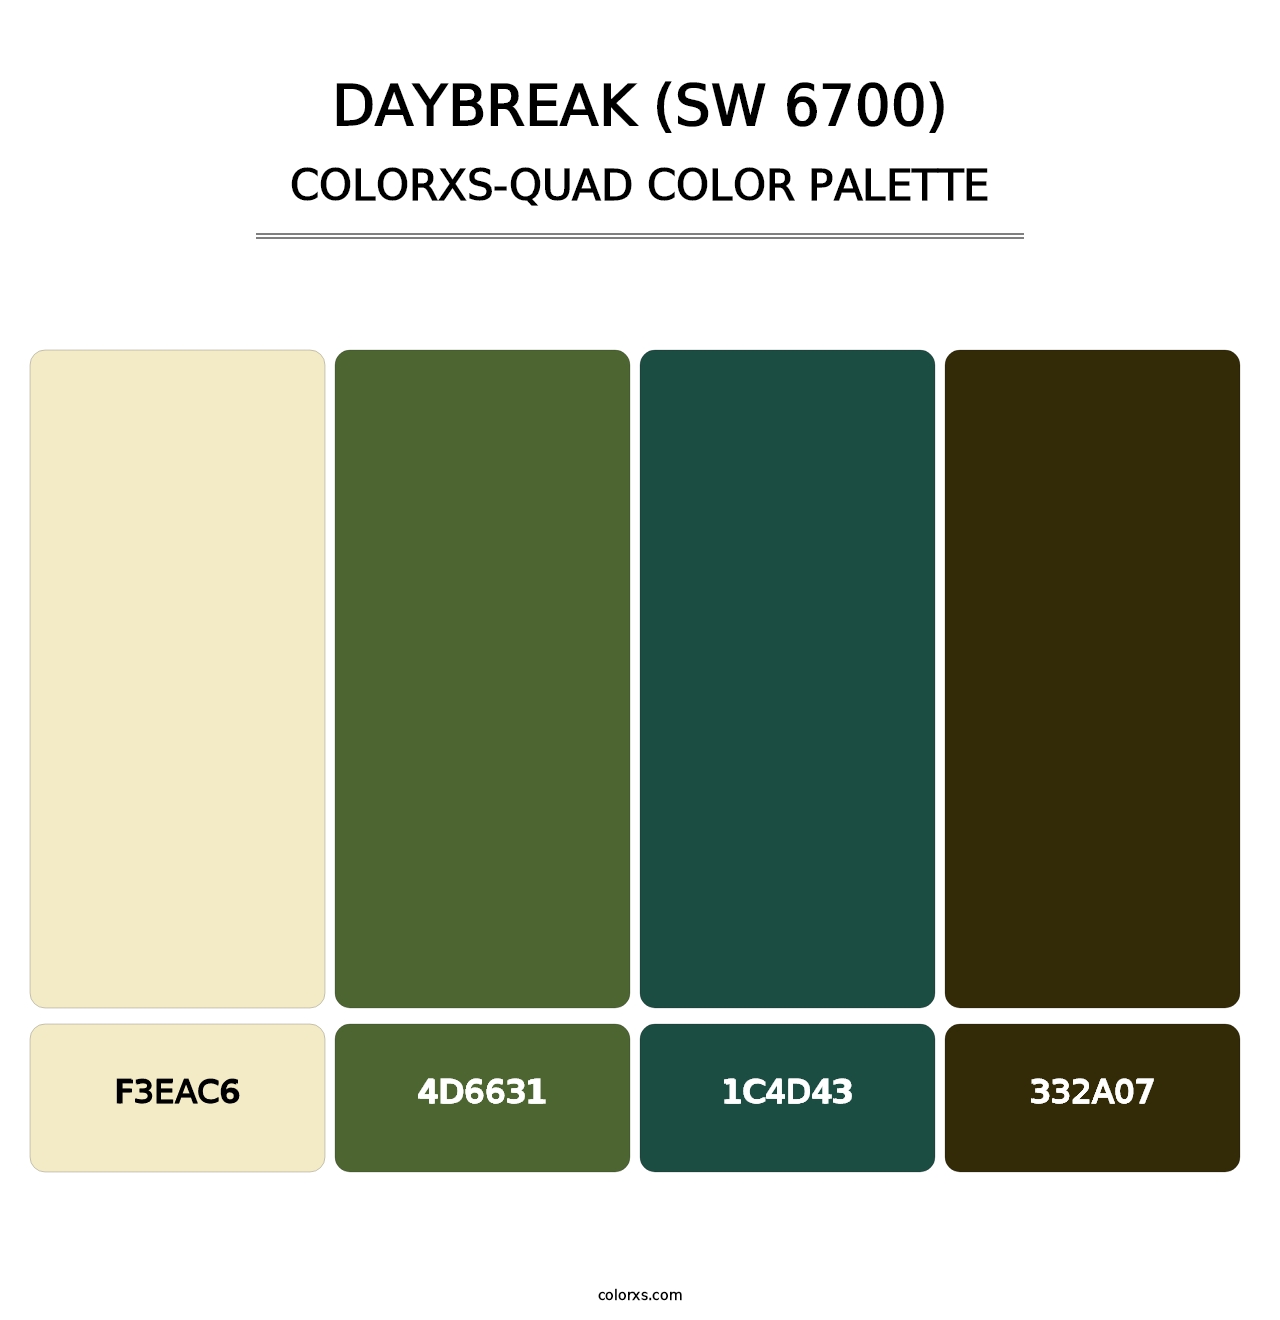 Daybreak (SW 6700) - Colorxs Quad Palette